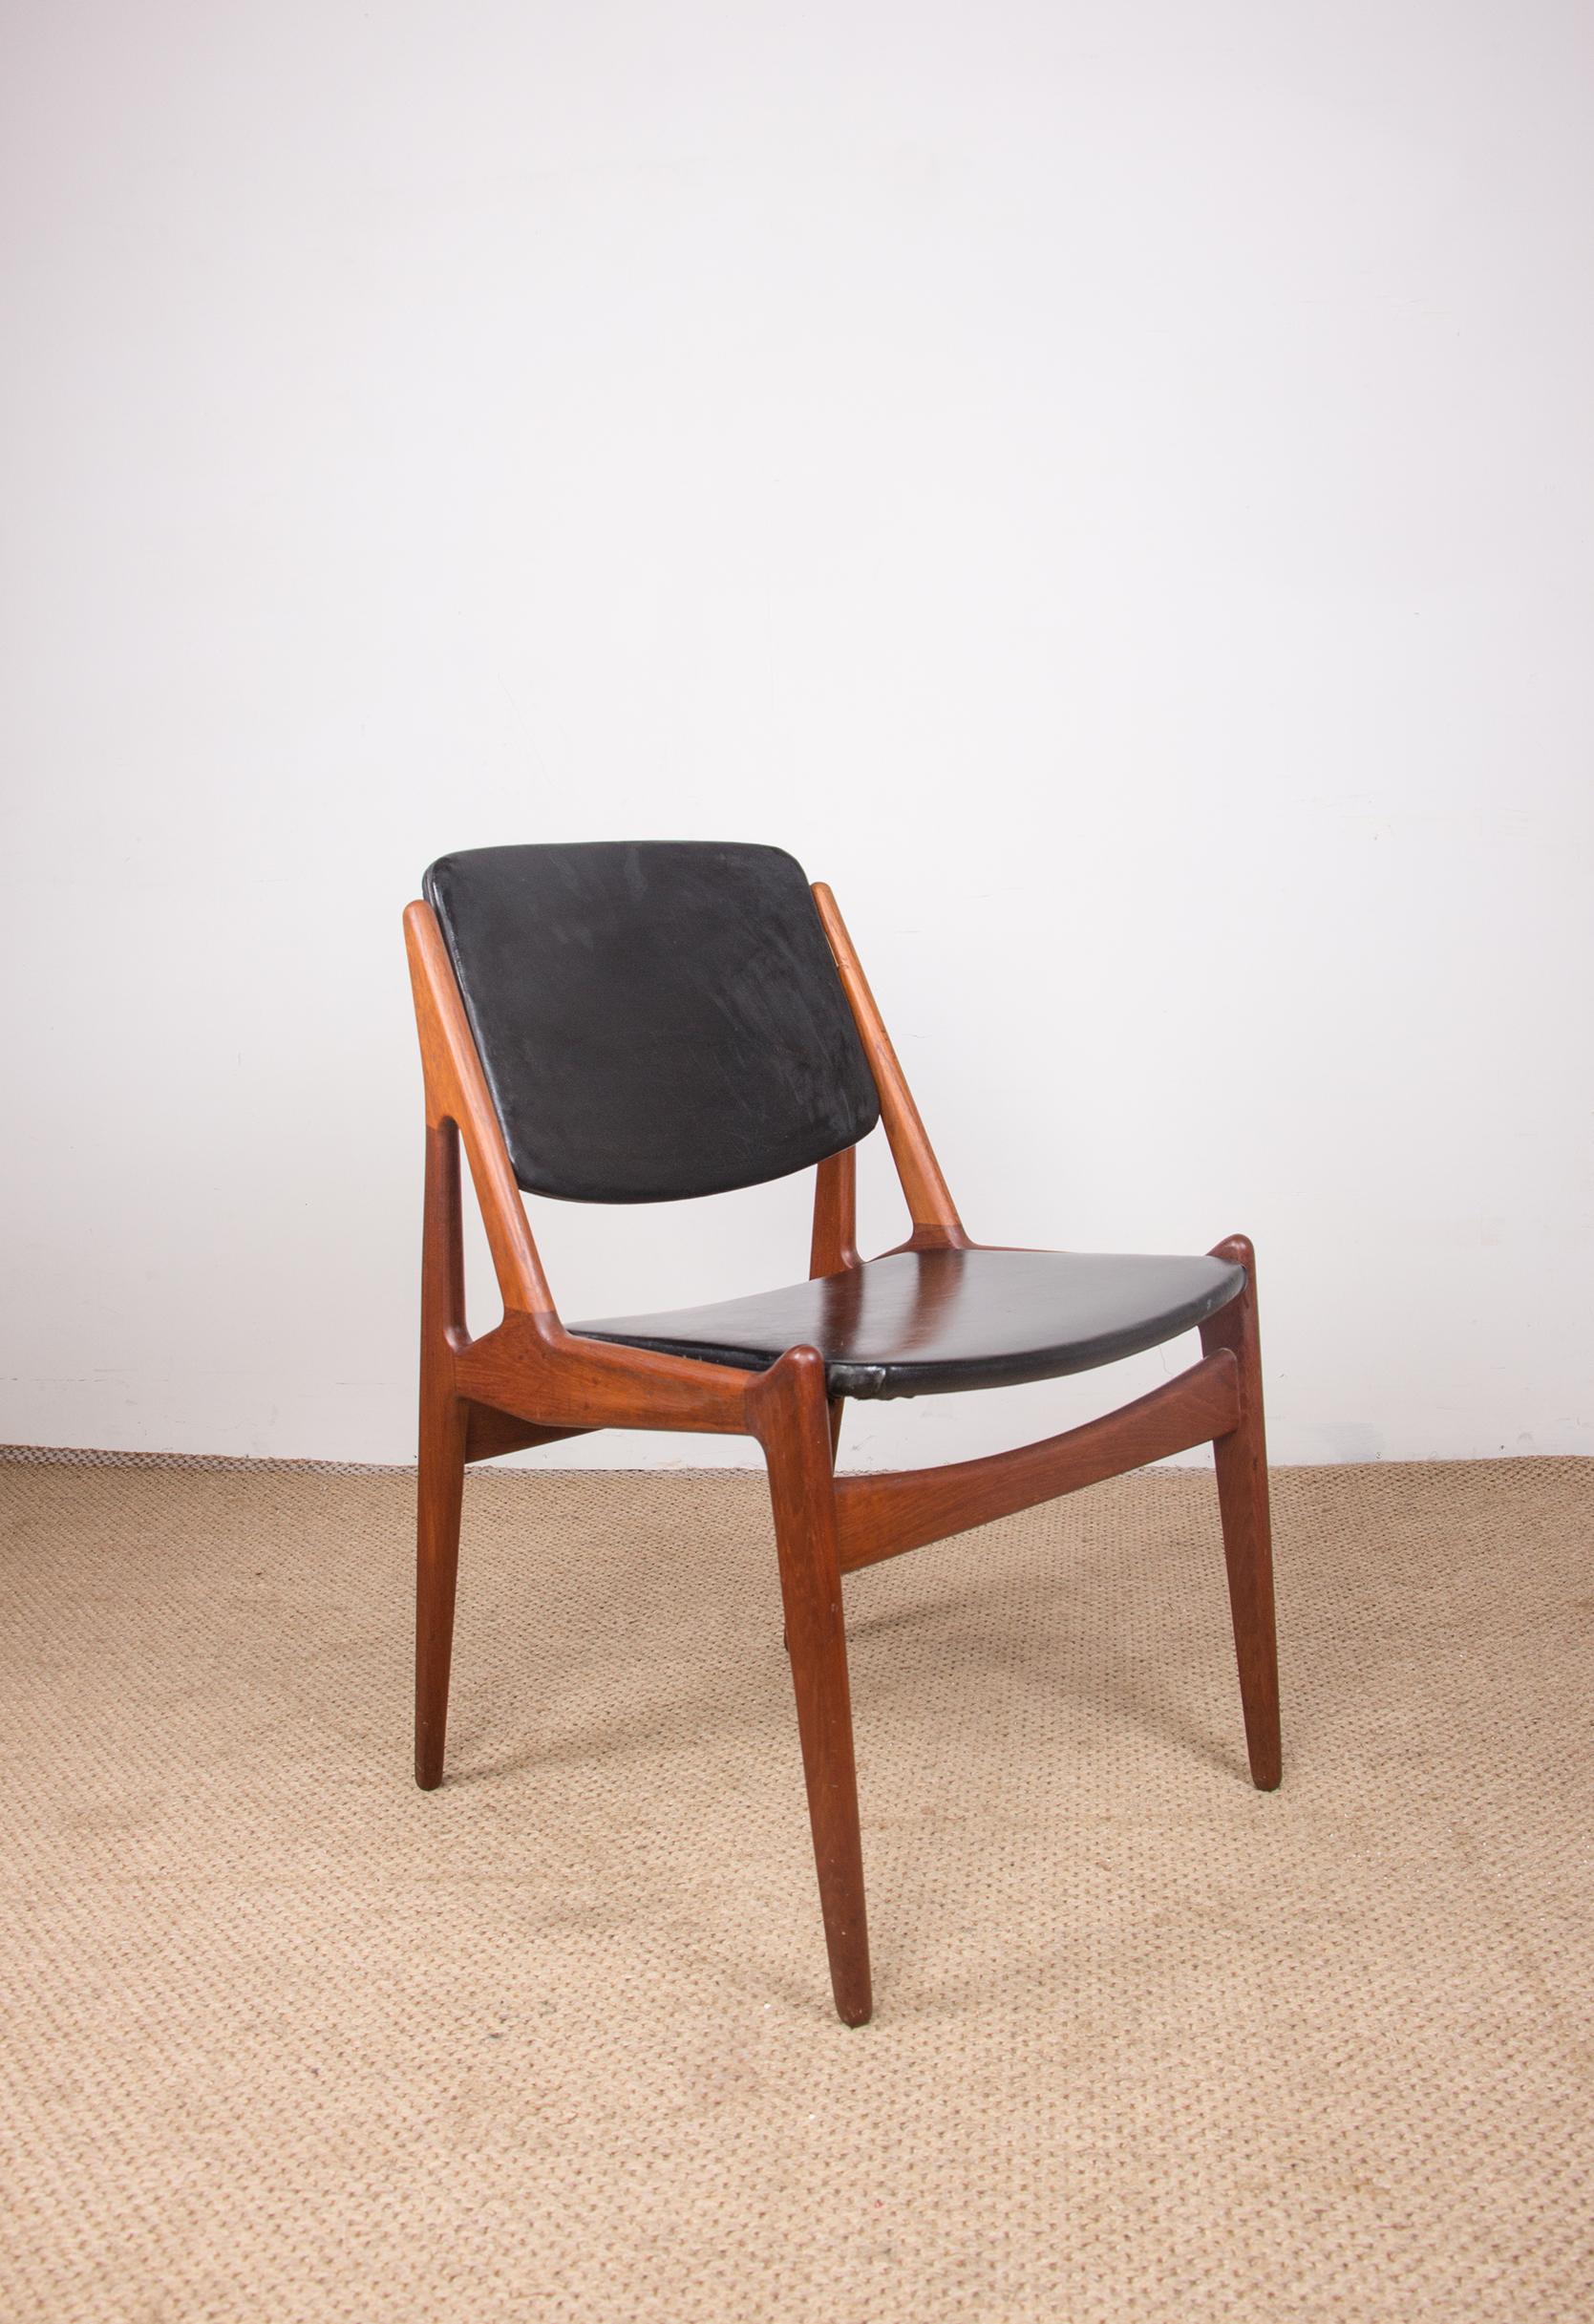 Mid-20th Century Suite of 4 Danish Teak and Black Skai Dining Chairs, 